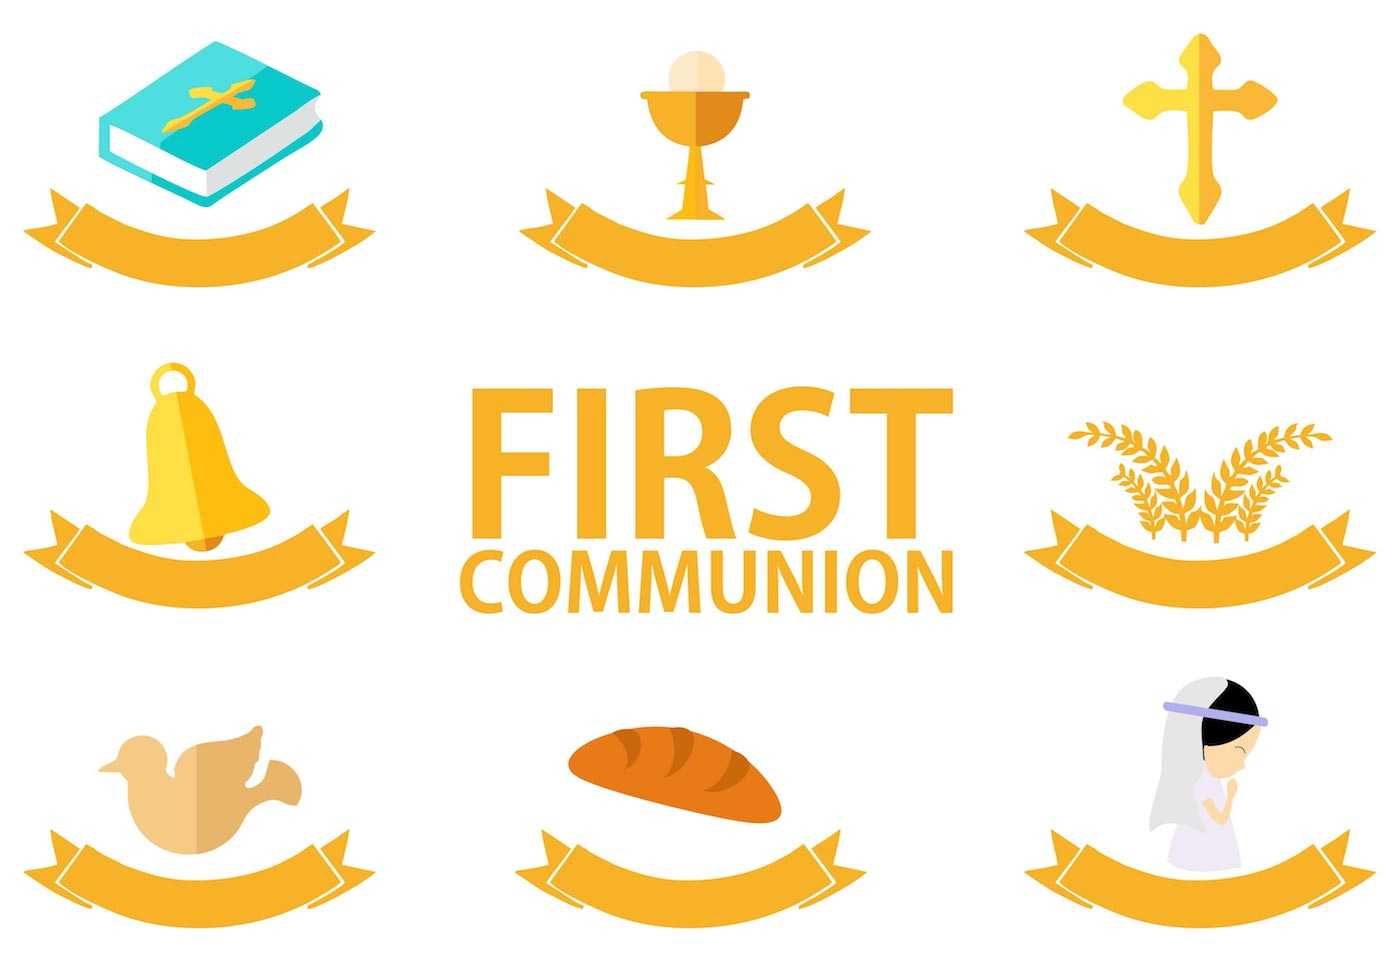 First Communion Template Free Vector Art – (25 Free Downloads) Regarding First Communion Banner Templates